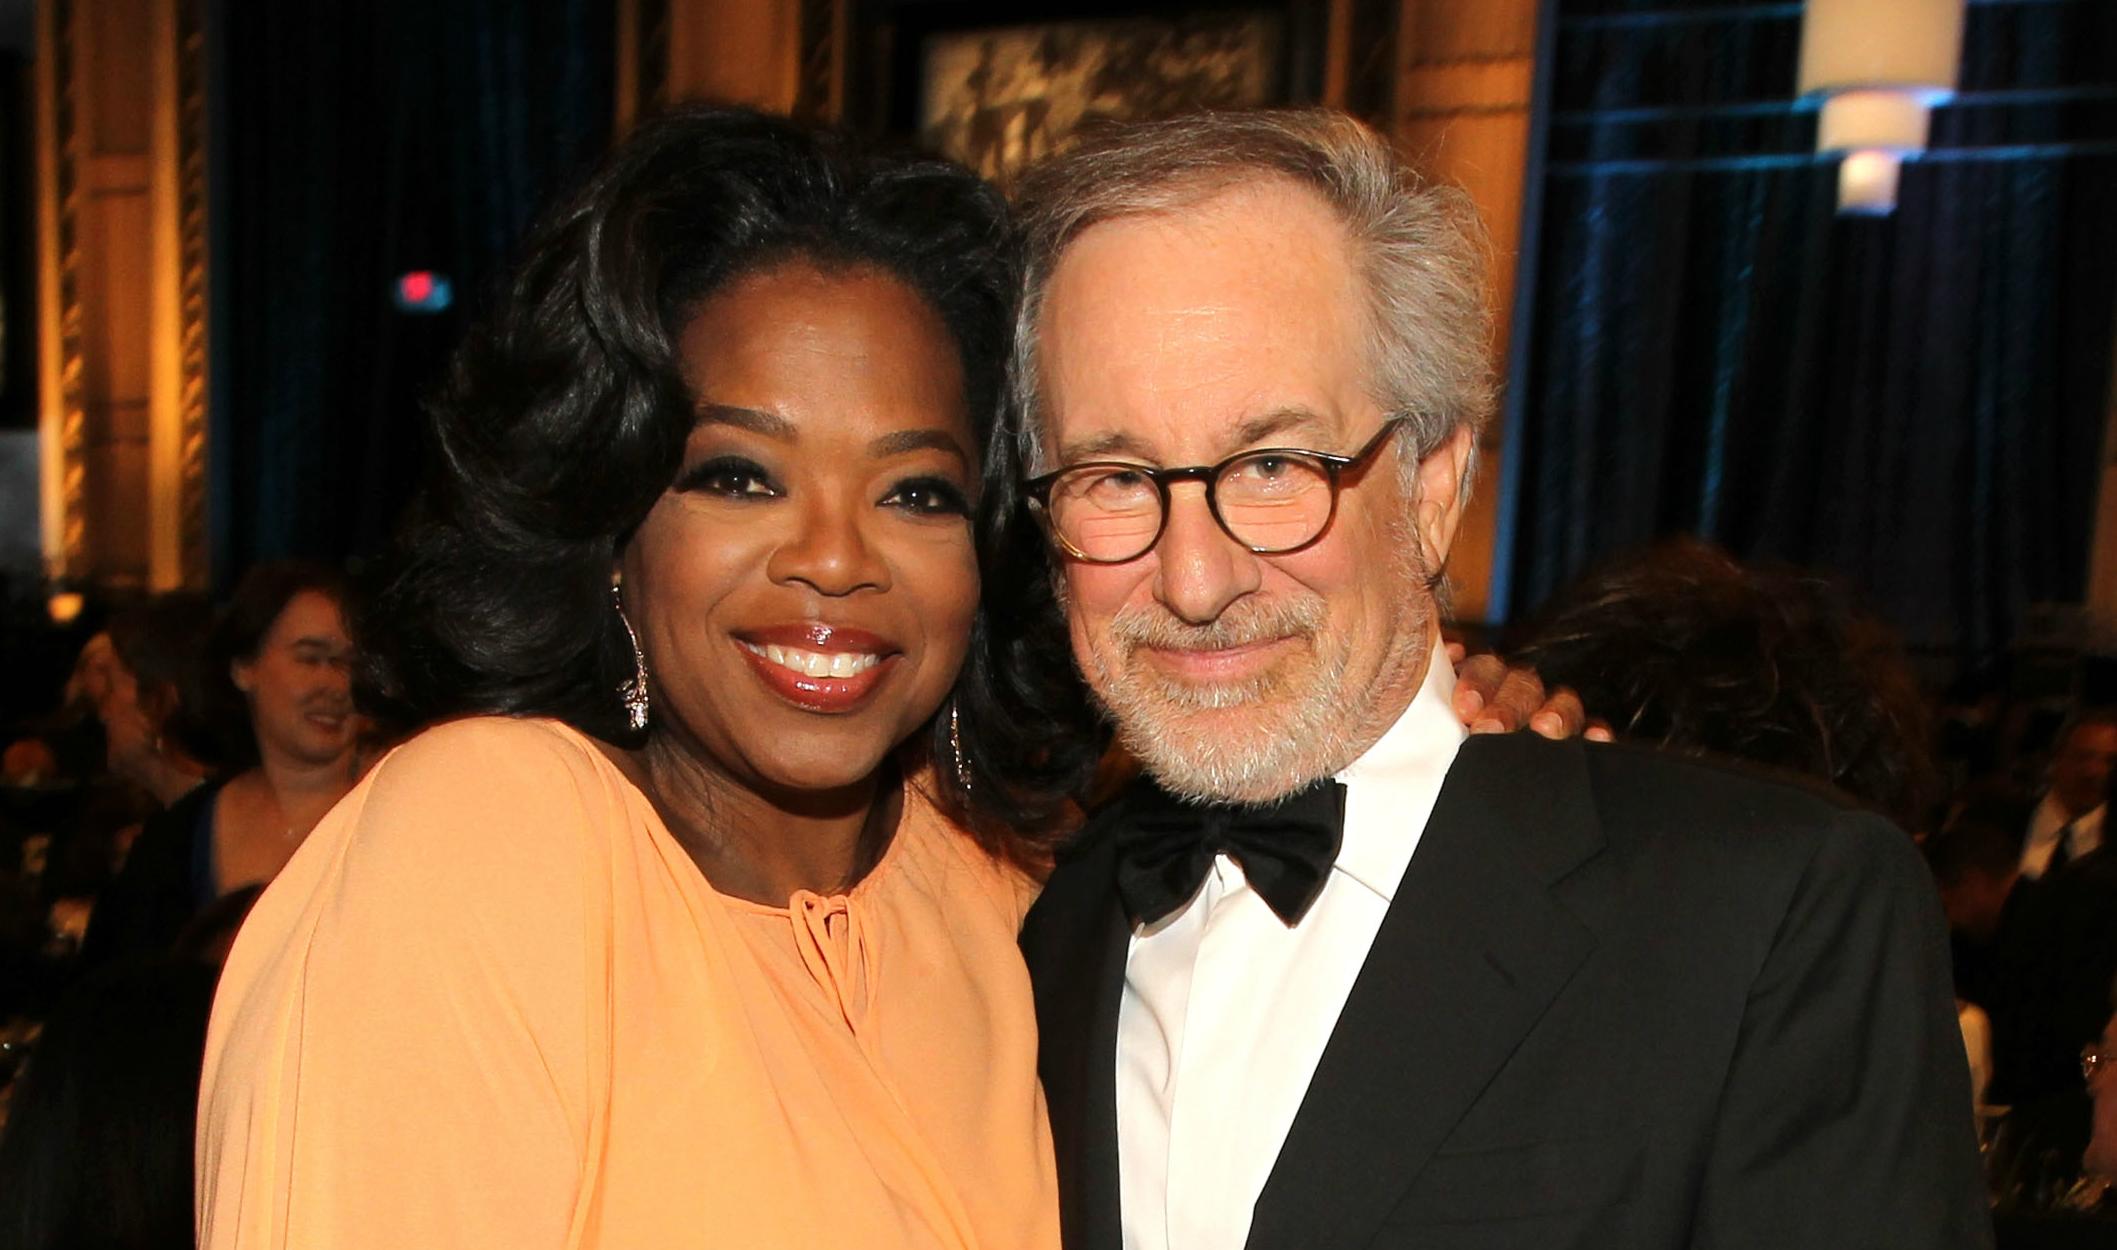 Spielberg gave Winfrey her first film role in the 1985 film